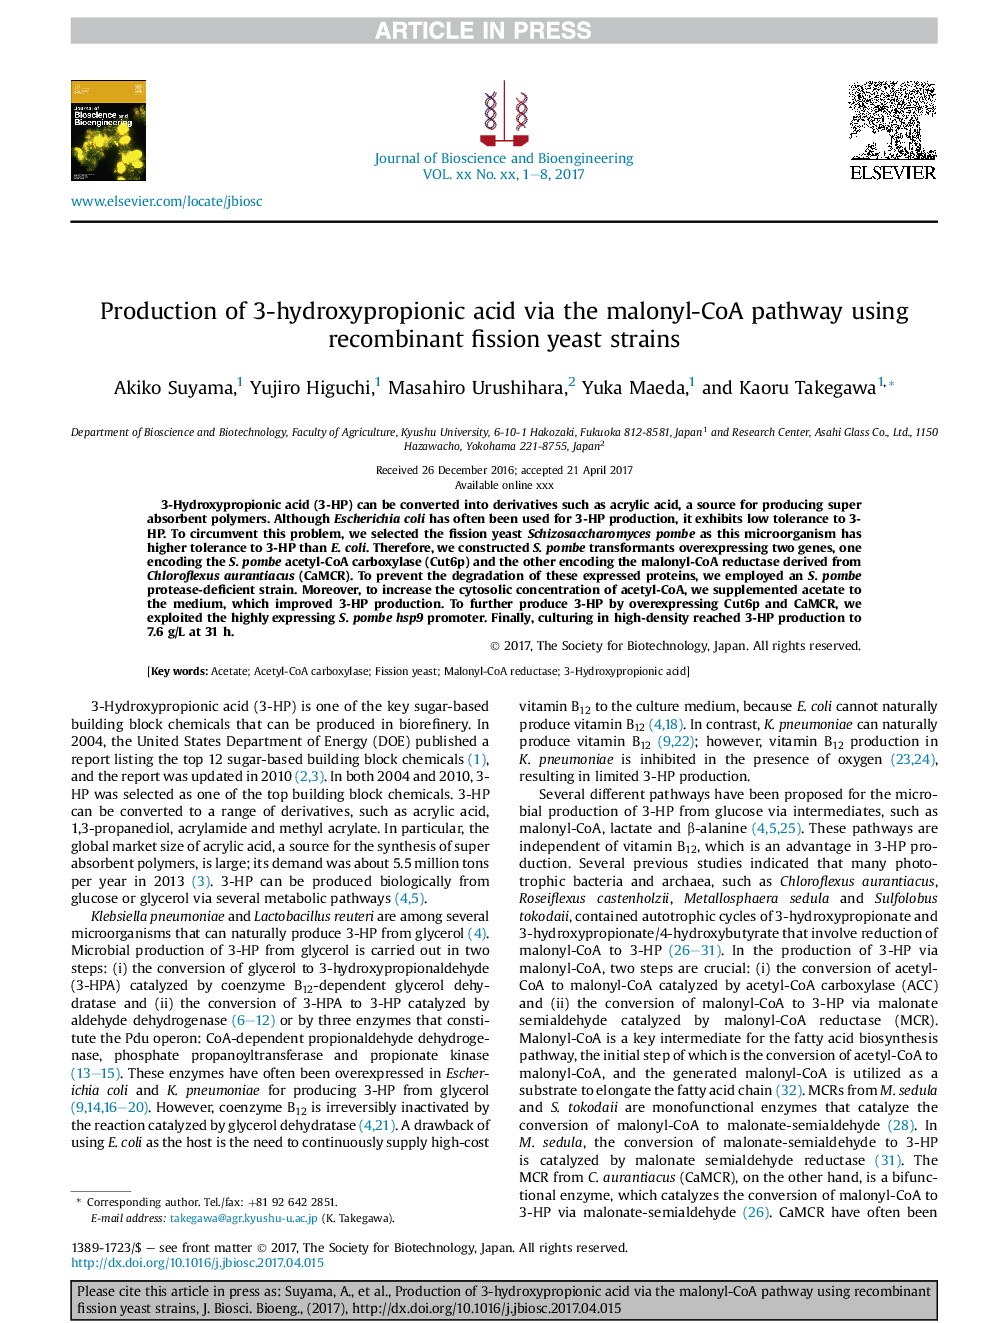 Production of 3-hydroxypropionic acid via the malonyl-CoA pathway using recombinant fission yeast strains